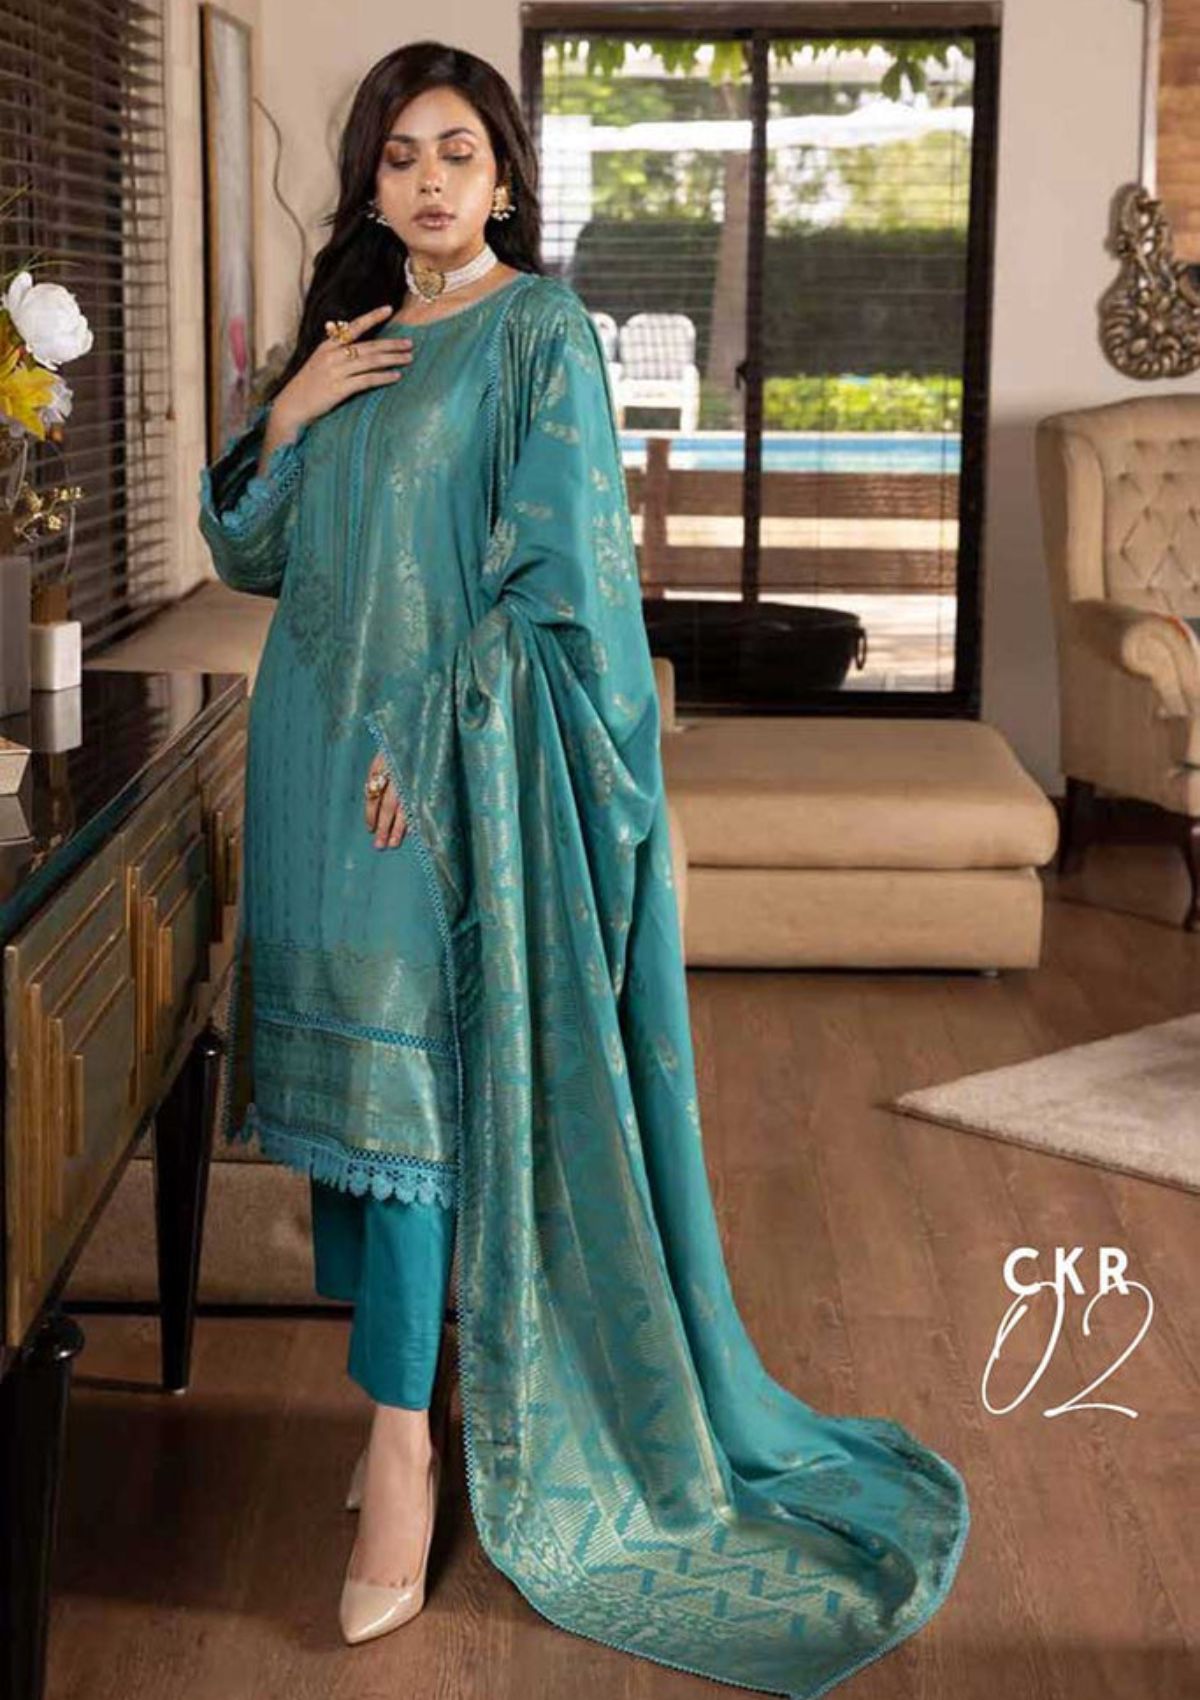 Winter Collection - Charizma - Karandi Jacquard - CKR#02 available at Saleem Fabrics Traditions